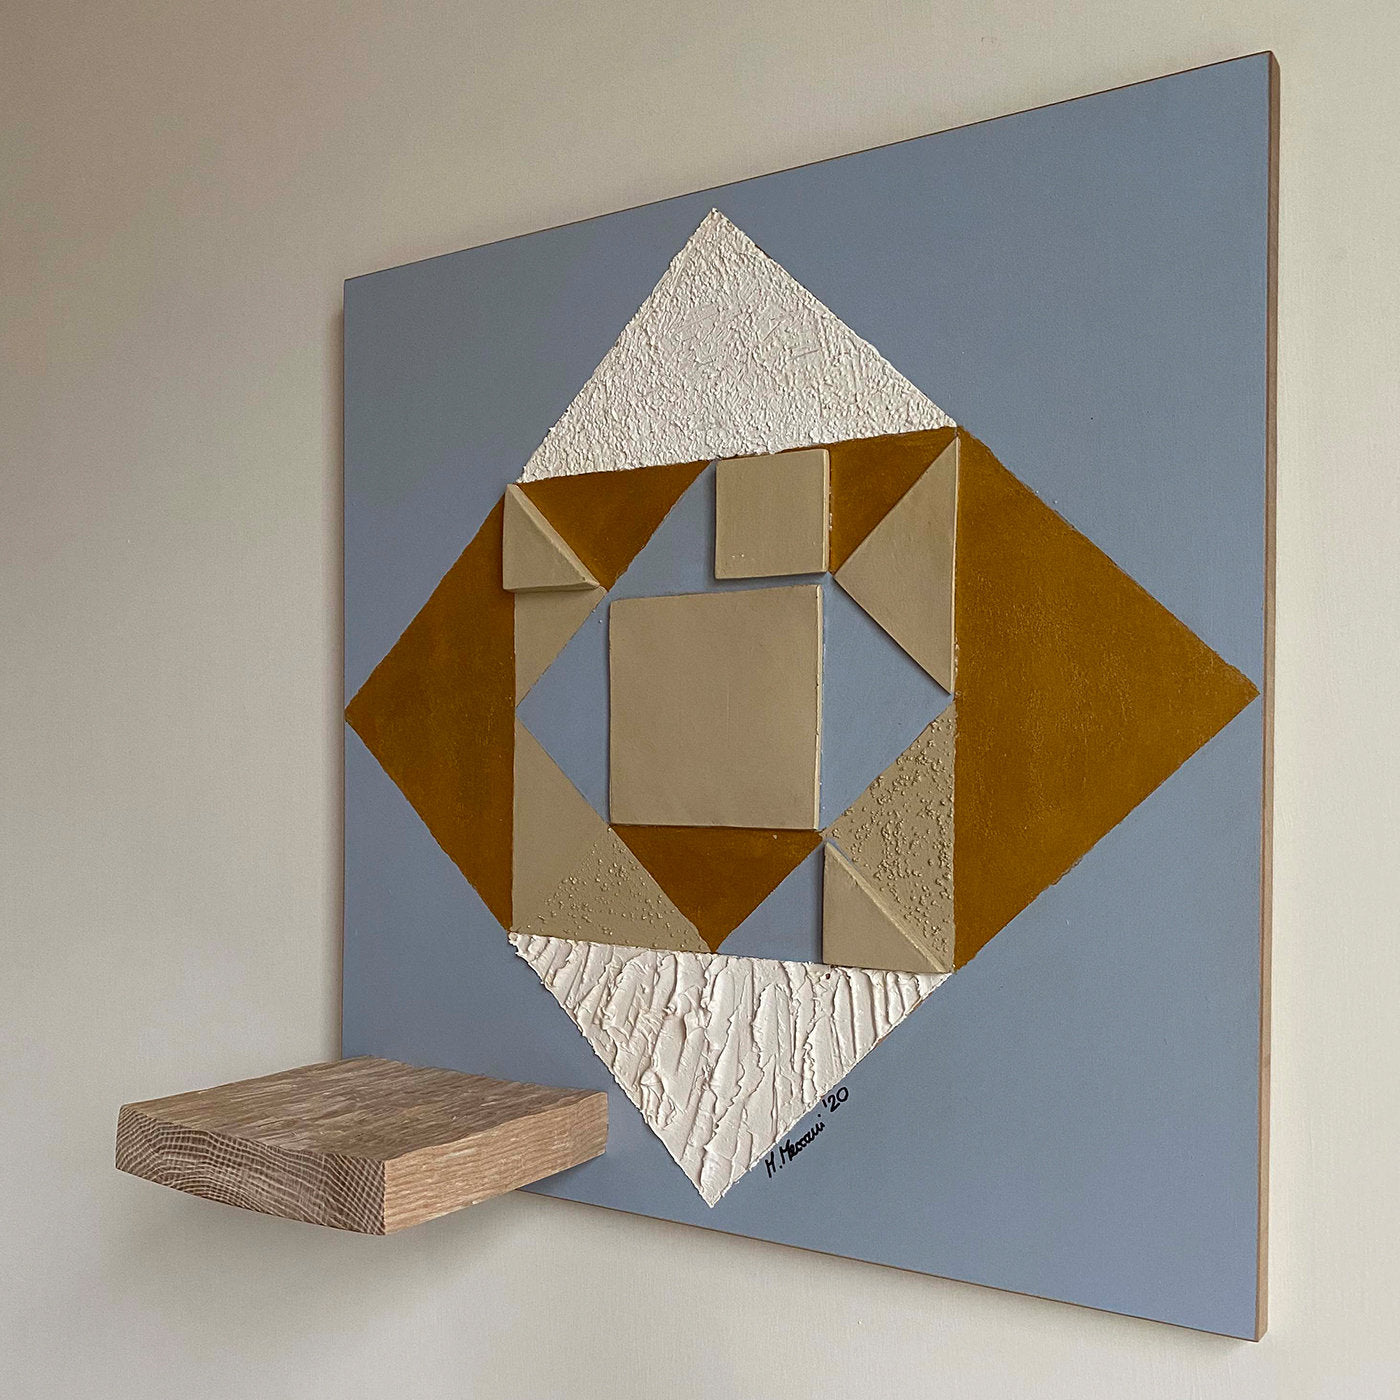 Ziggurat Decorative Panel and Shelf by Mascia Meccani - Alternative view 3